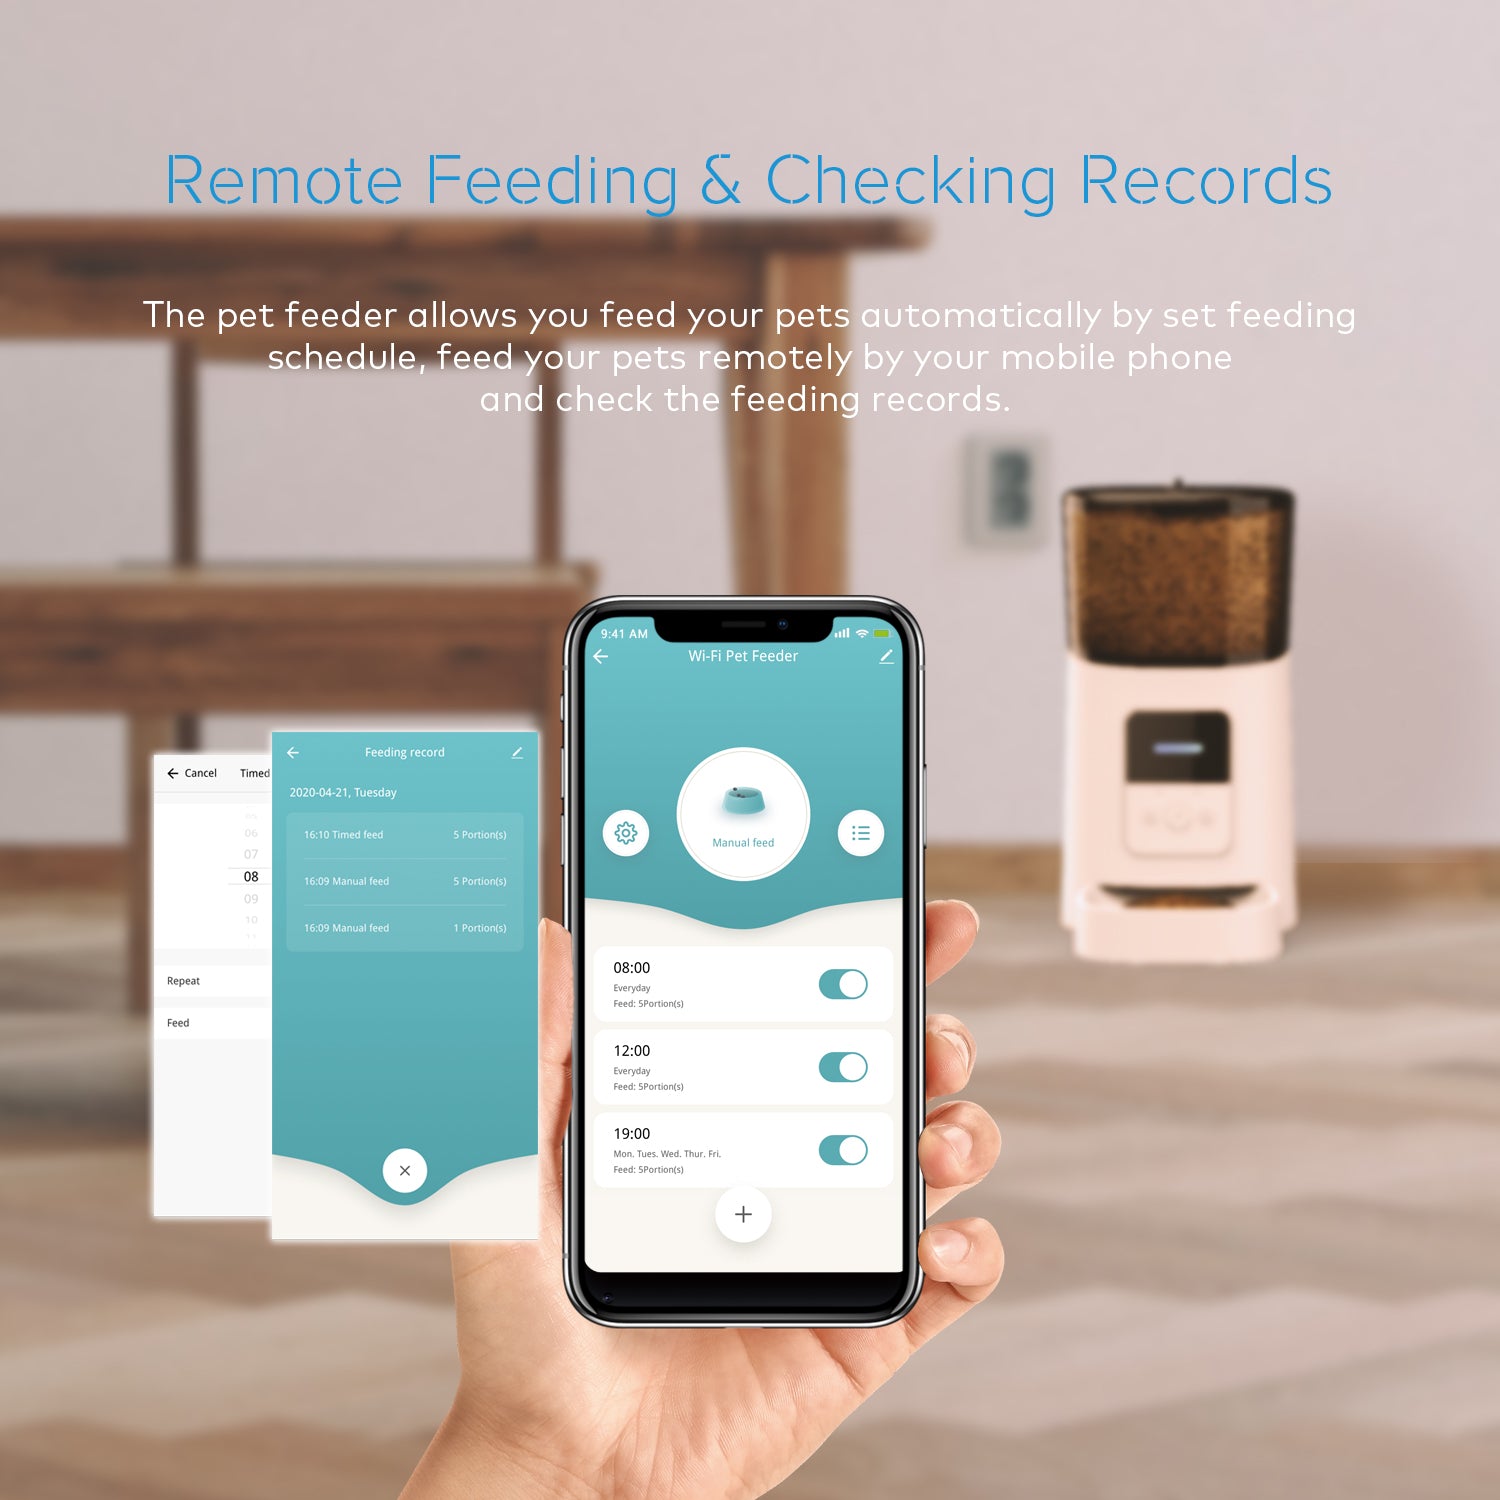 SMARTPAWBurpurr Premium Pet Feeder (Wifi Version) -  Remote feeding and checking records